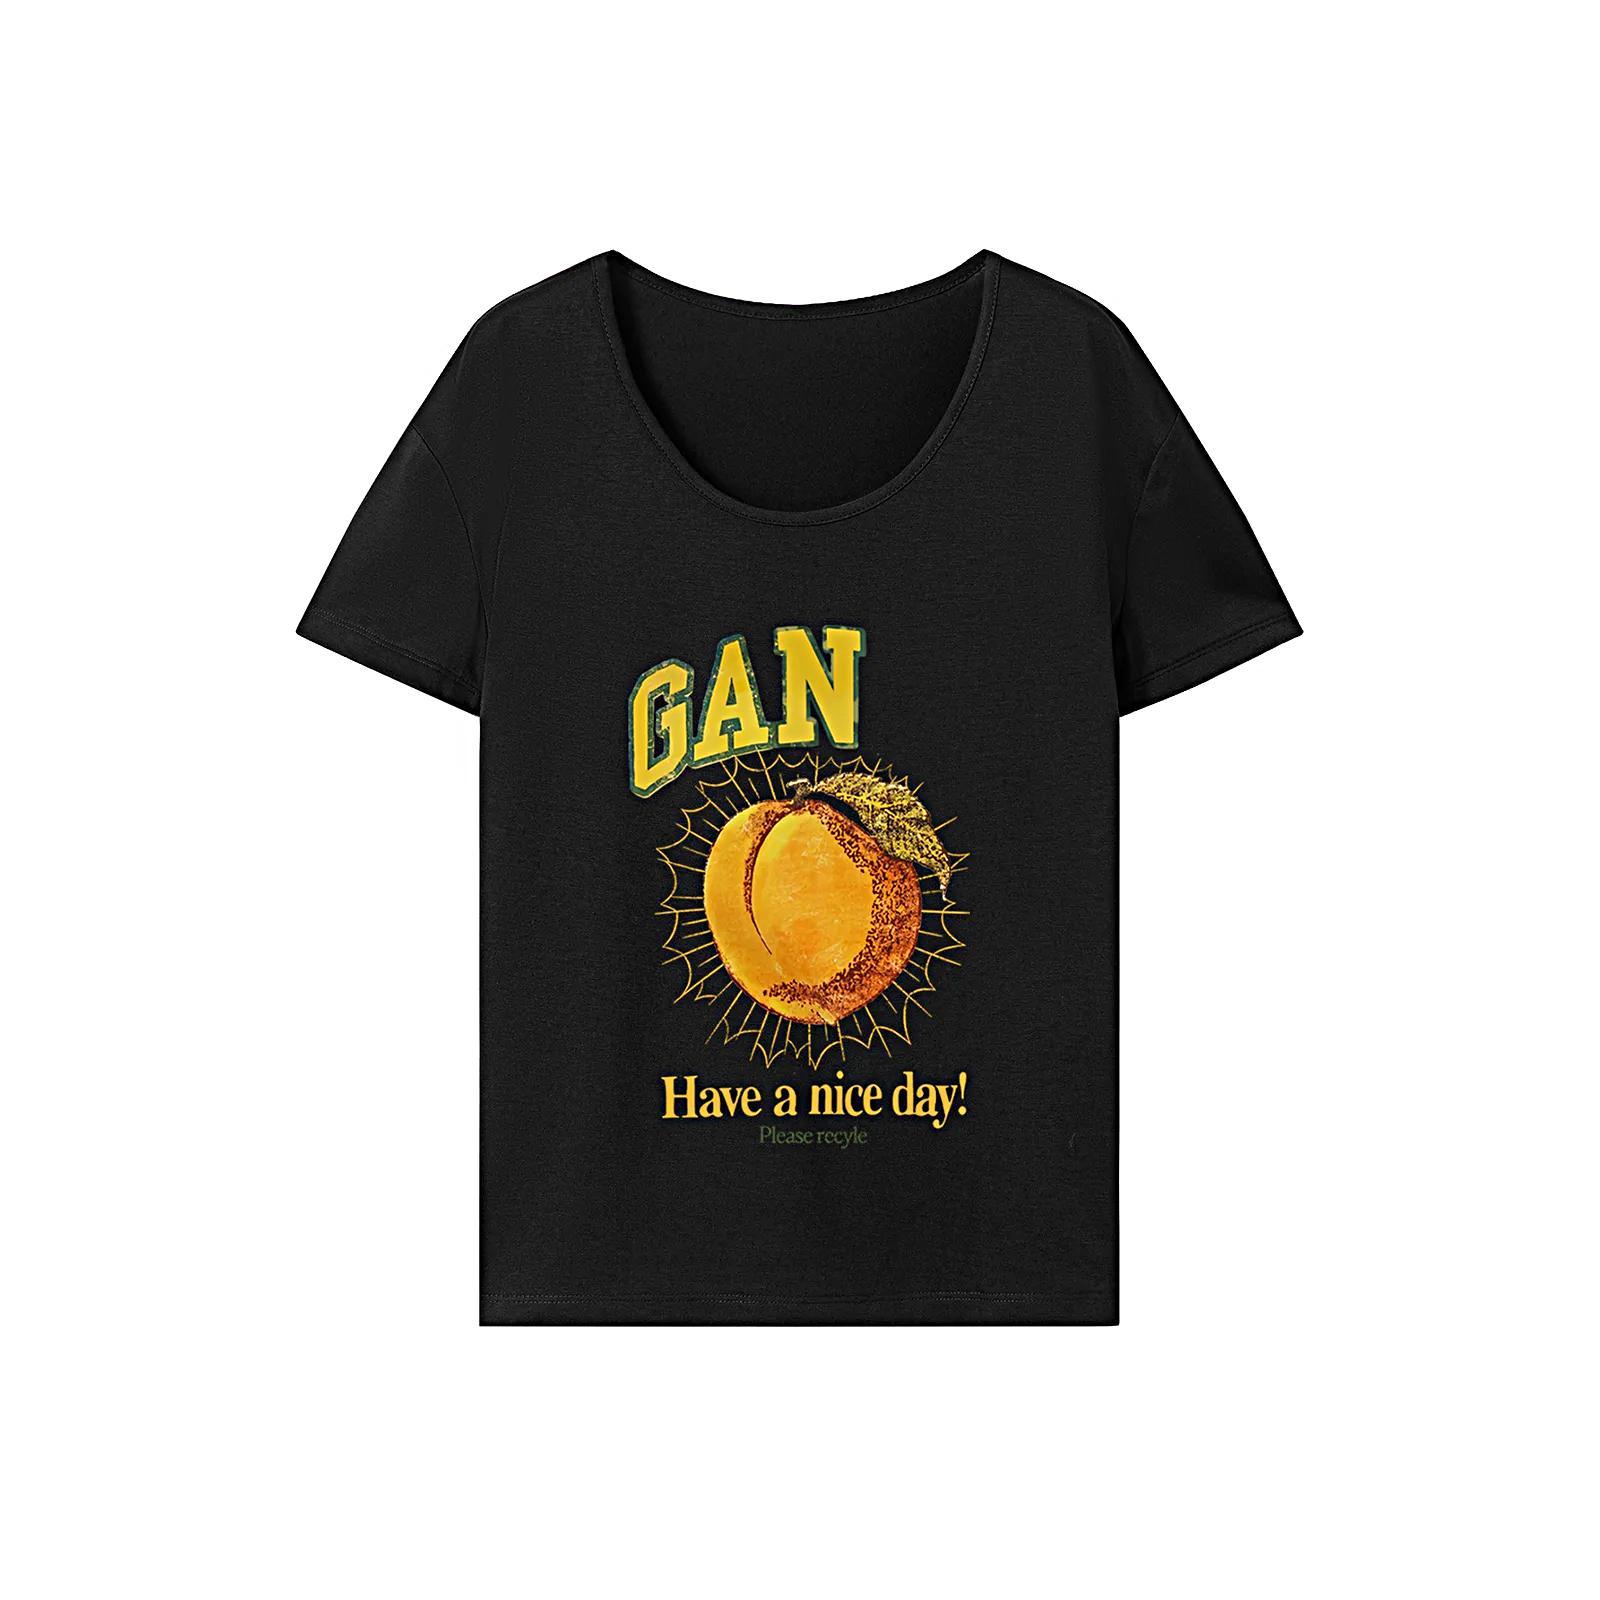 Women's T Shirt Summer Casual Basic Tee Shirt for Commuting Daily Wear Beach L